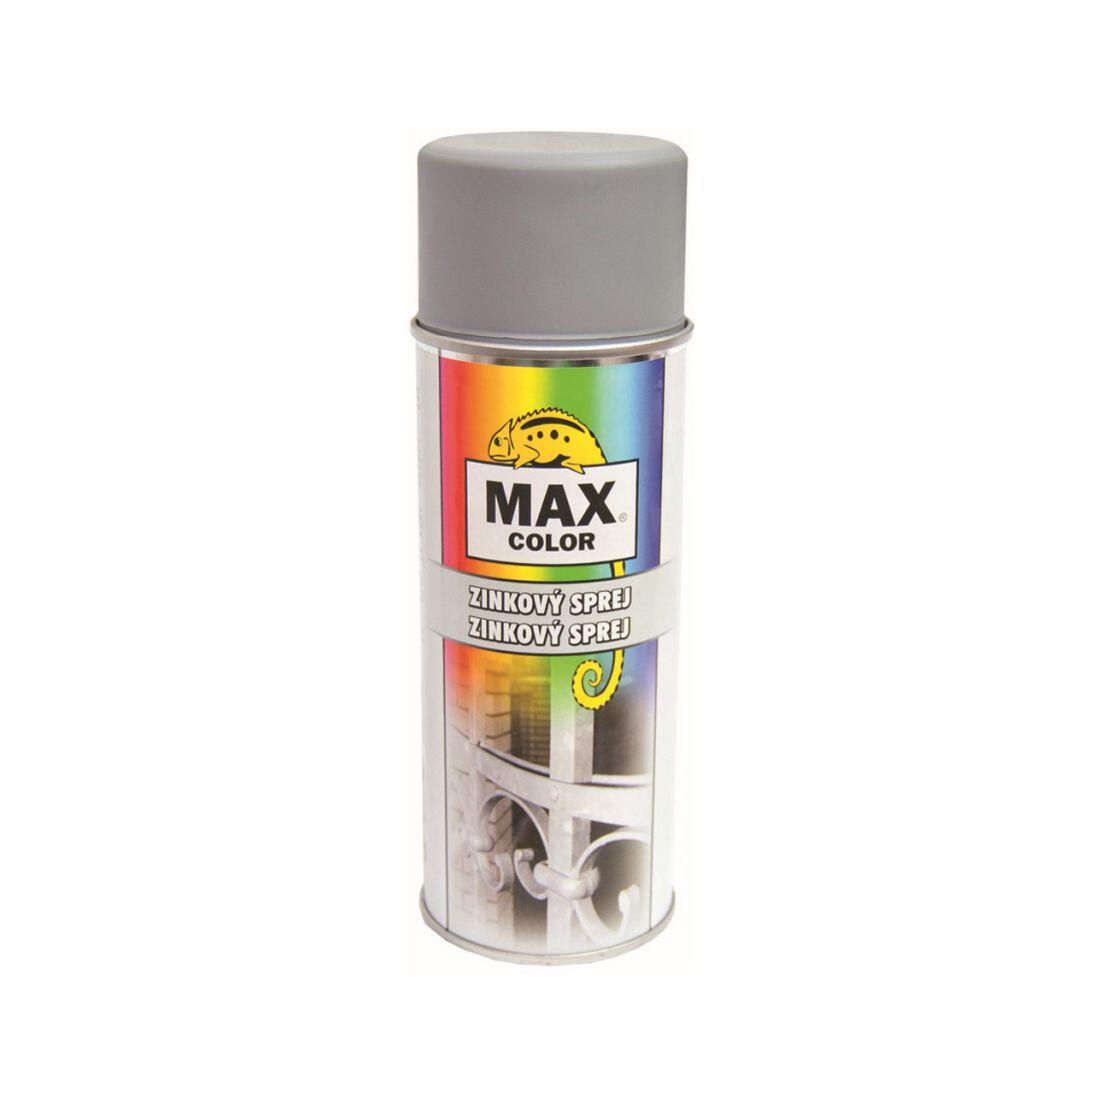 sprej MAX COLOR 400ml zinkový 0.31 Kg MAXMIX Sklad14 825575 6